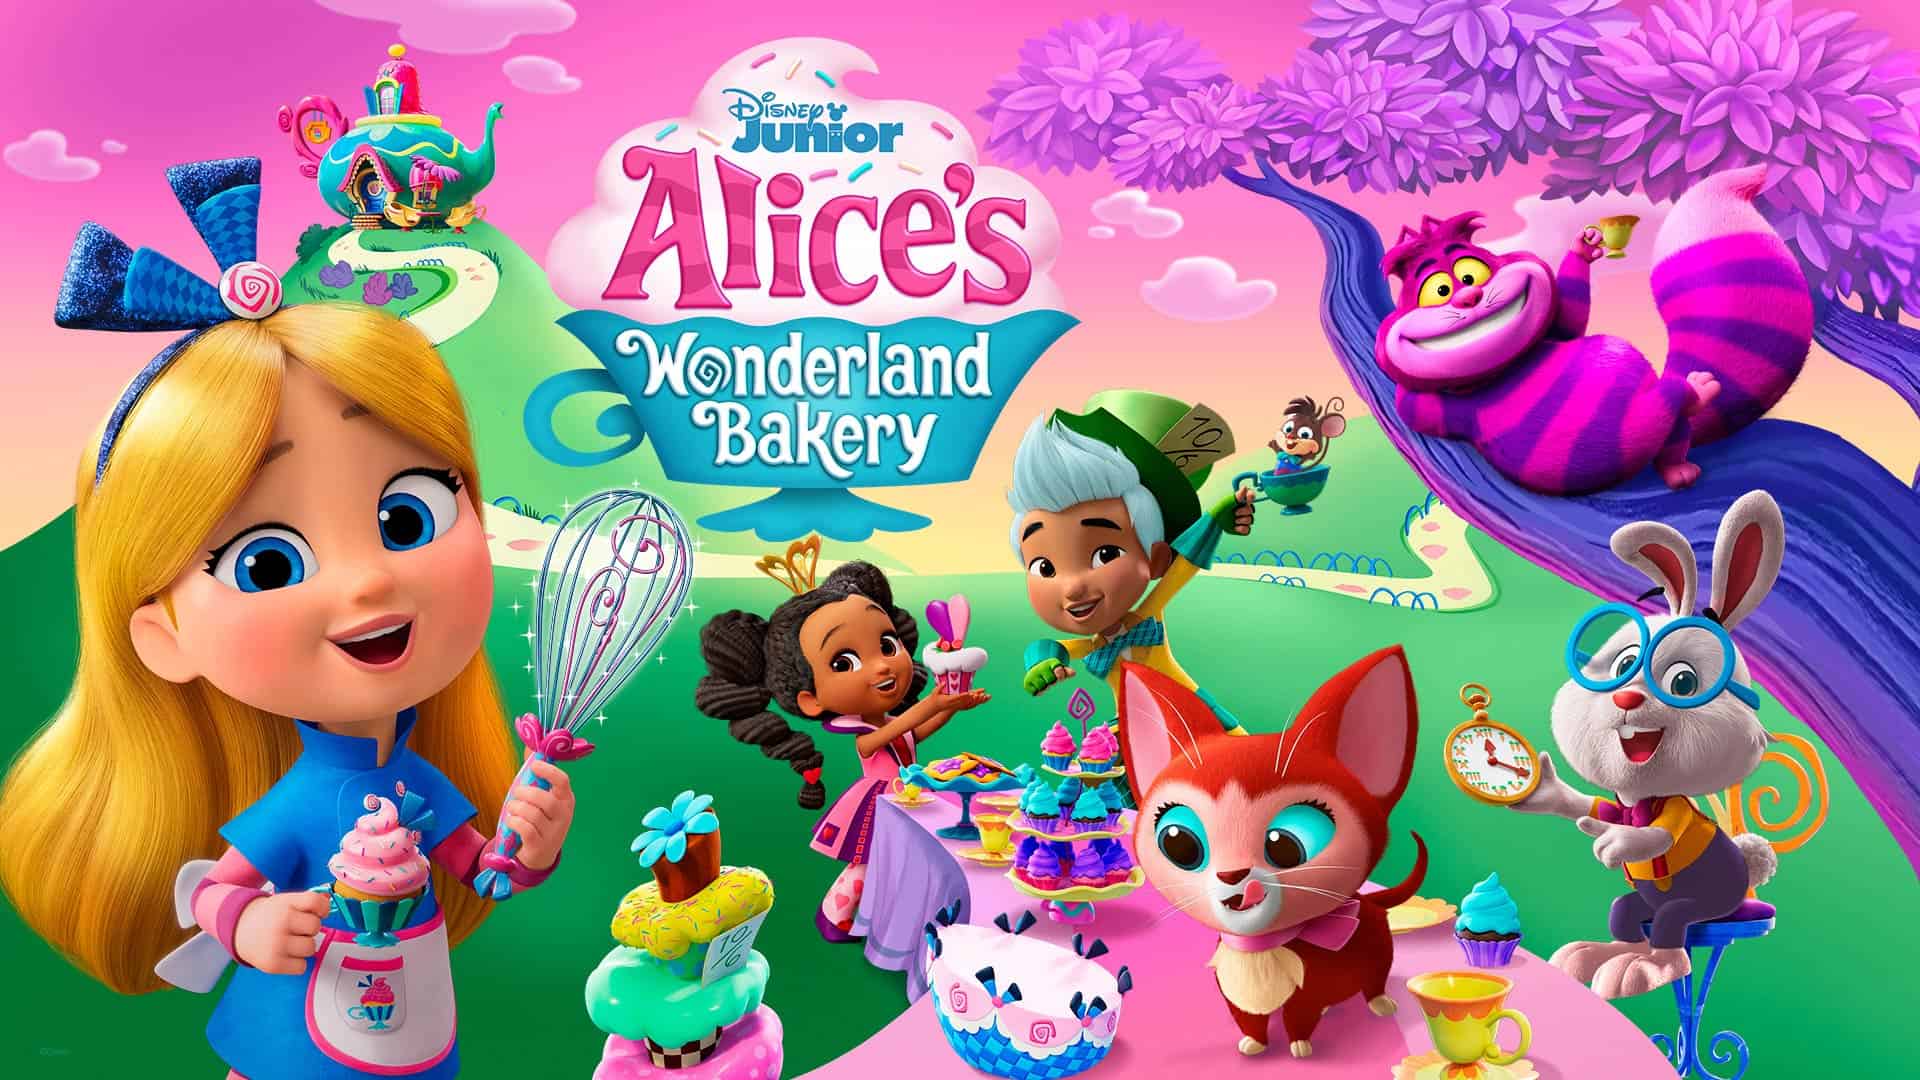 Magical recipe adventures await in Alice's Wonderland Bakery S1 on Disney  Junior (DStv Channel 309)